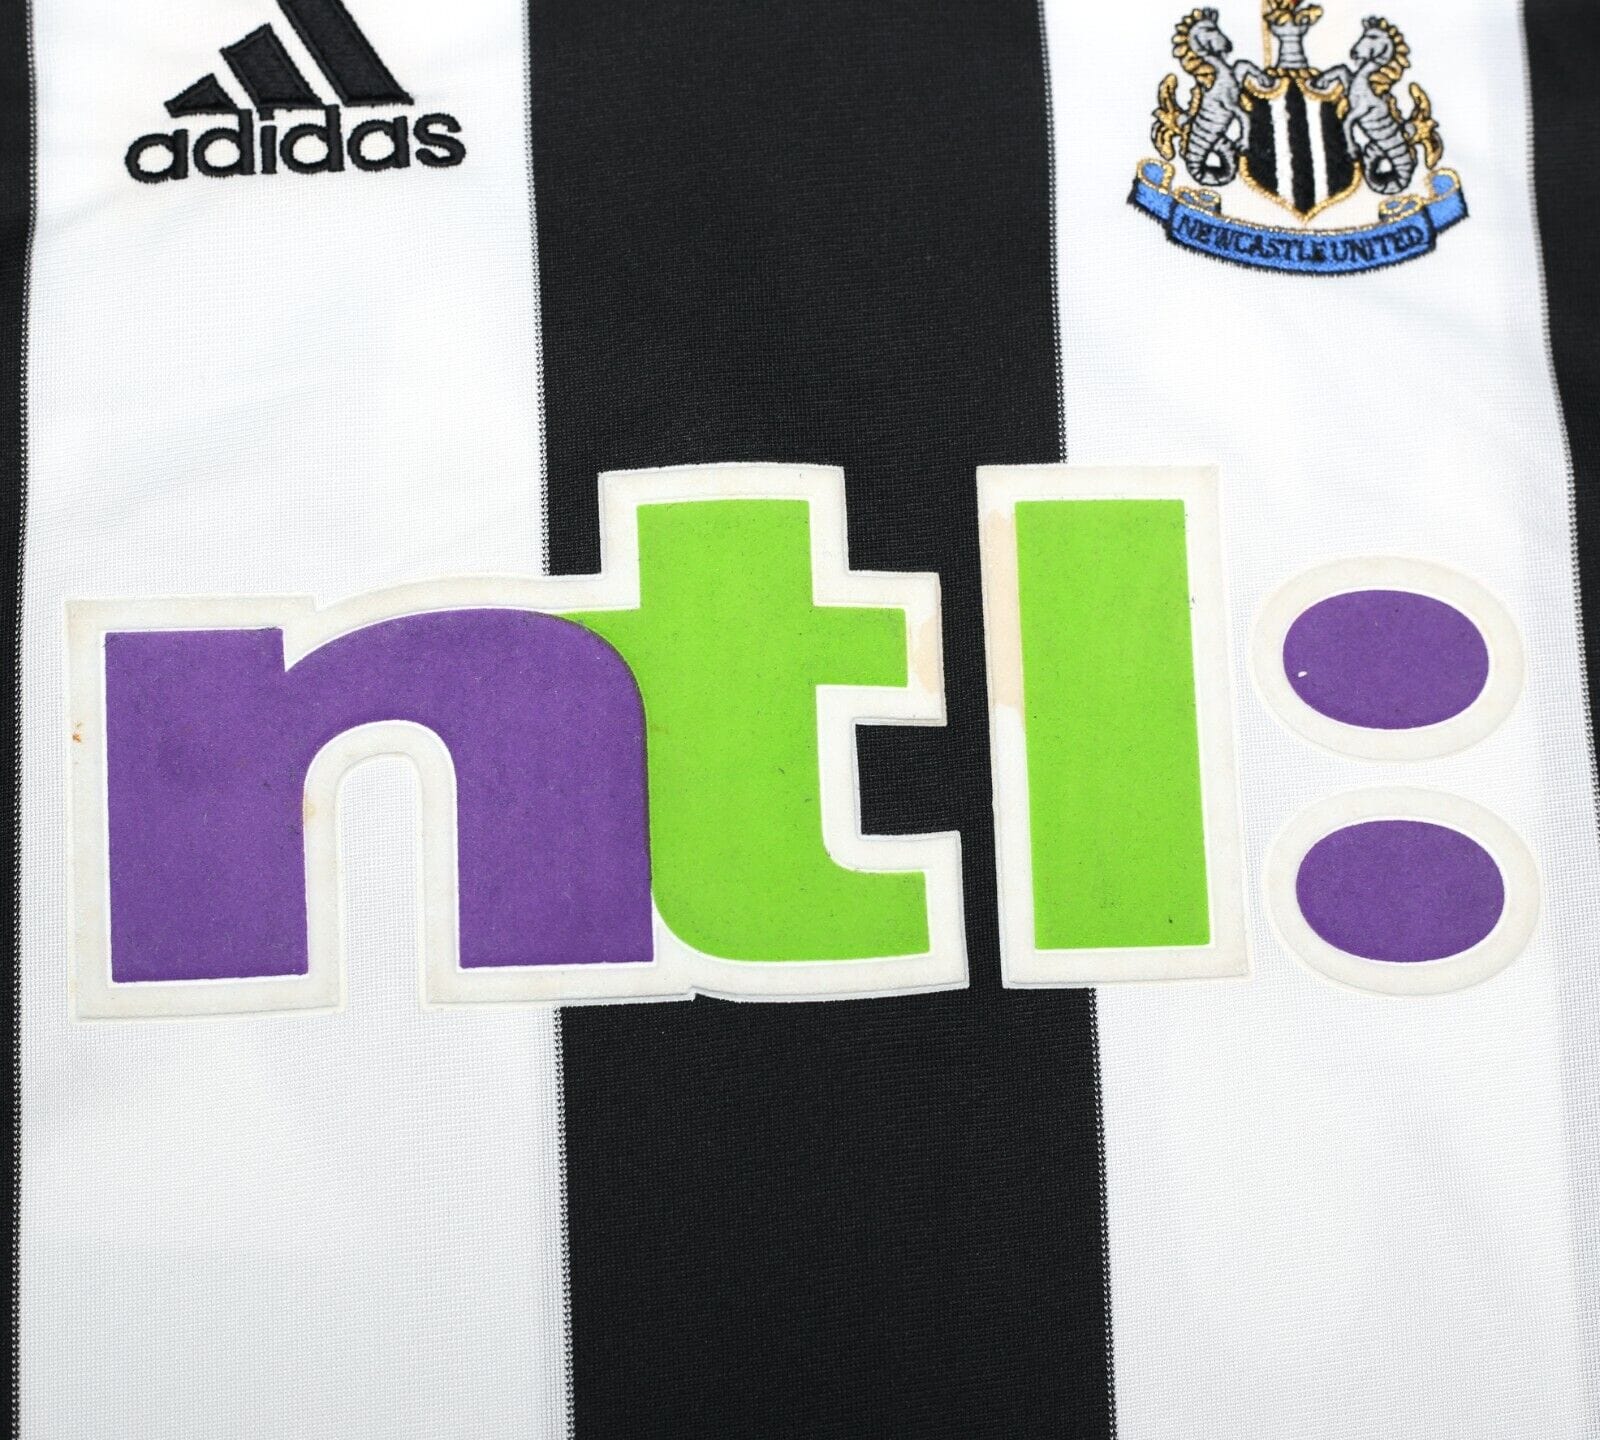 2001/03 ROBERT #32 Newcastle United Vintage adidas Home Football Shirt (M)